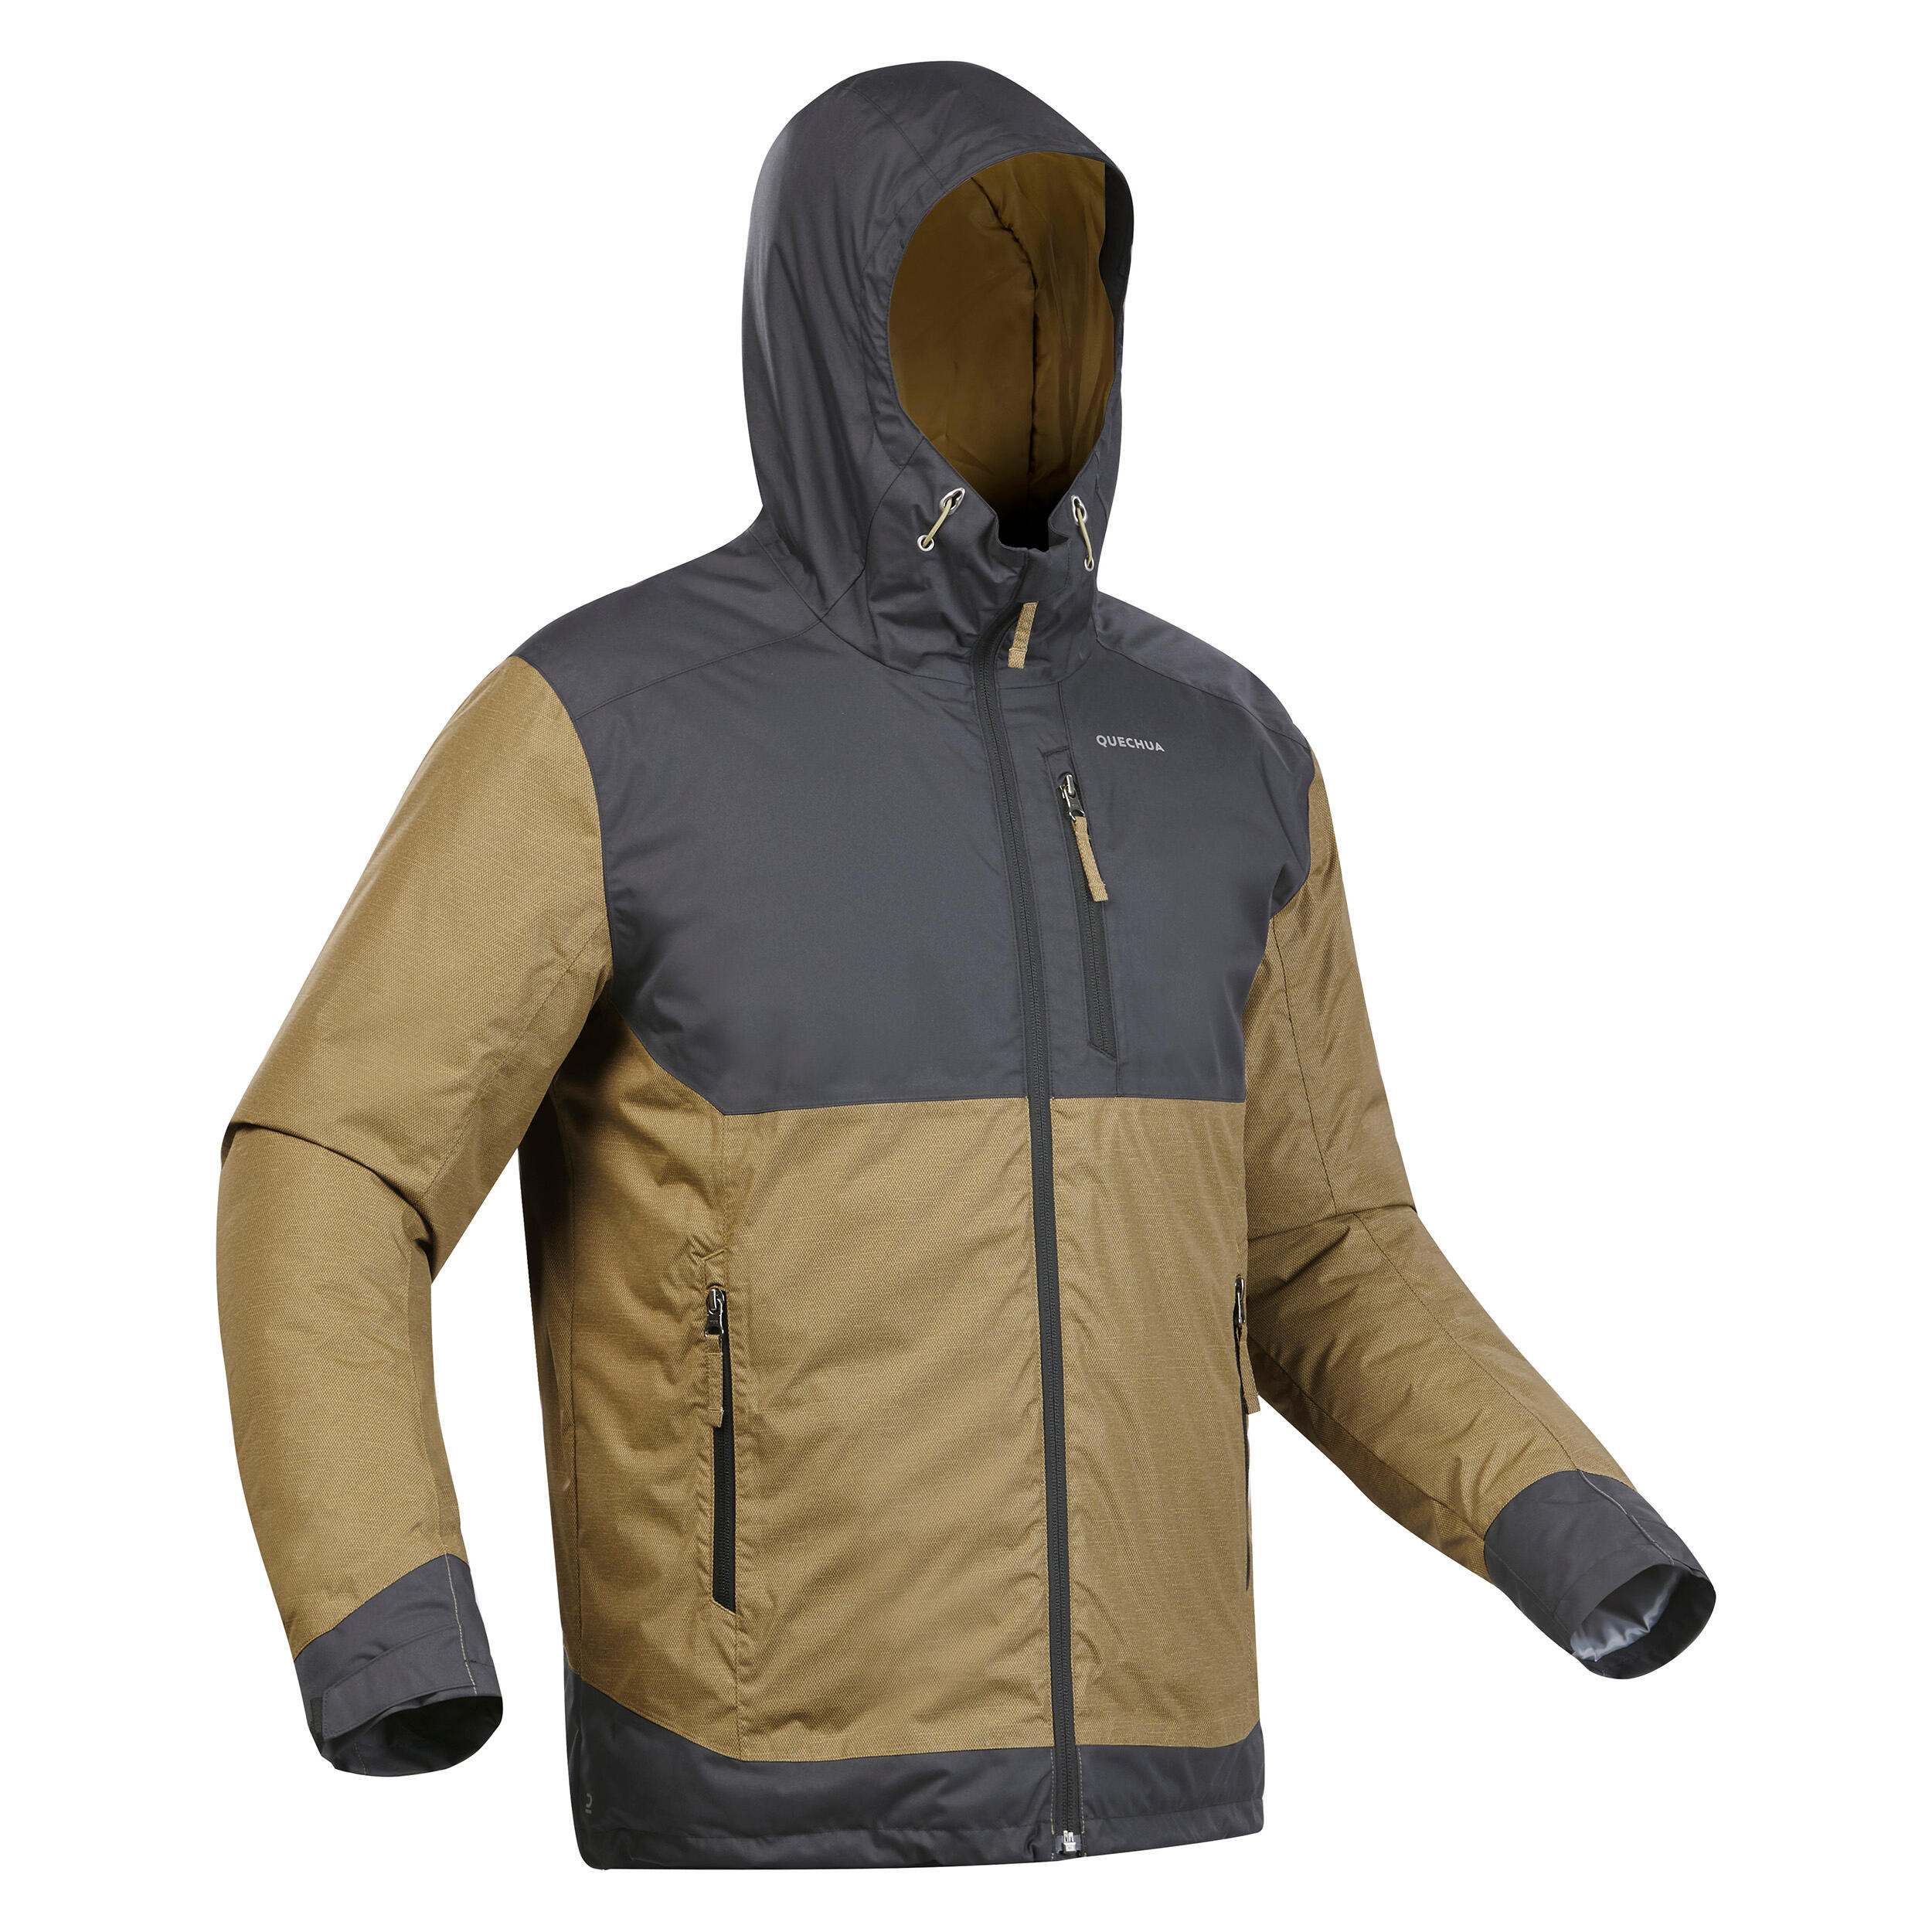 Men’s hiking waterproof winter jacket - SH500 -10°C 11/20